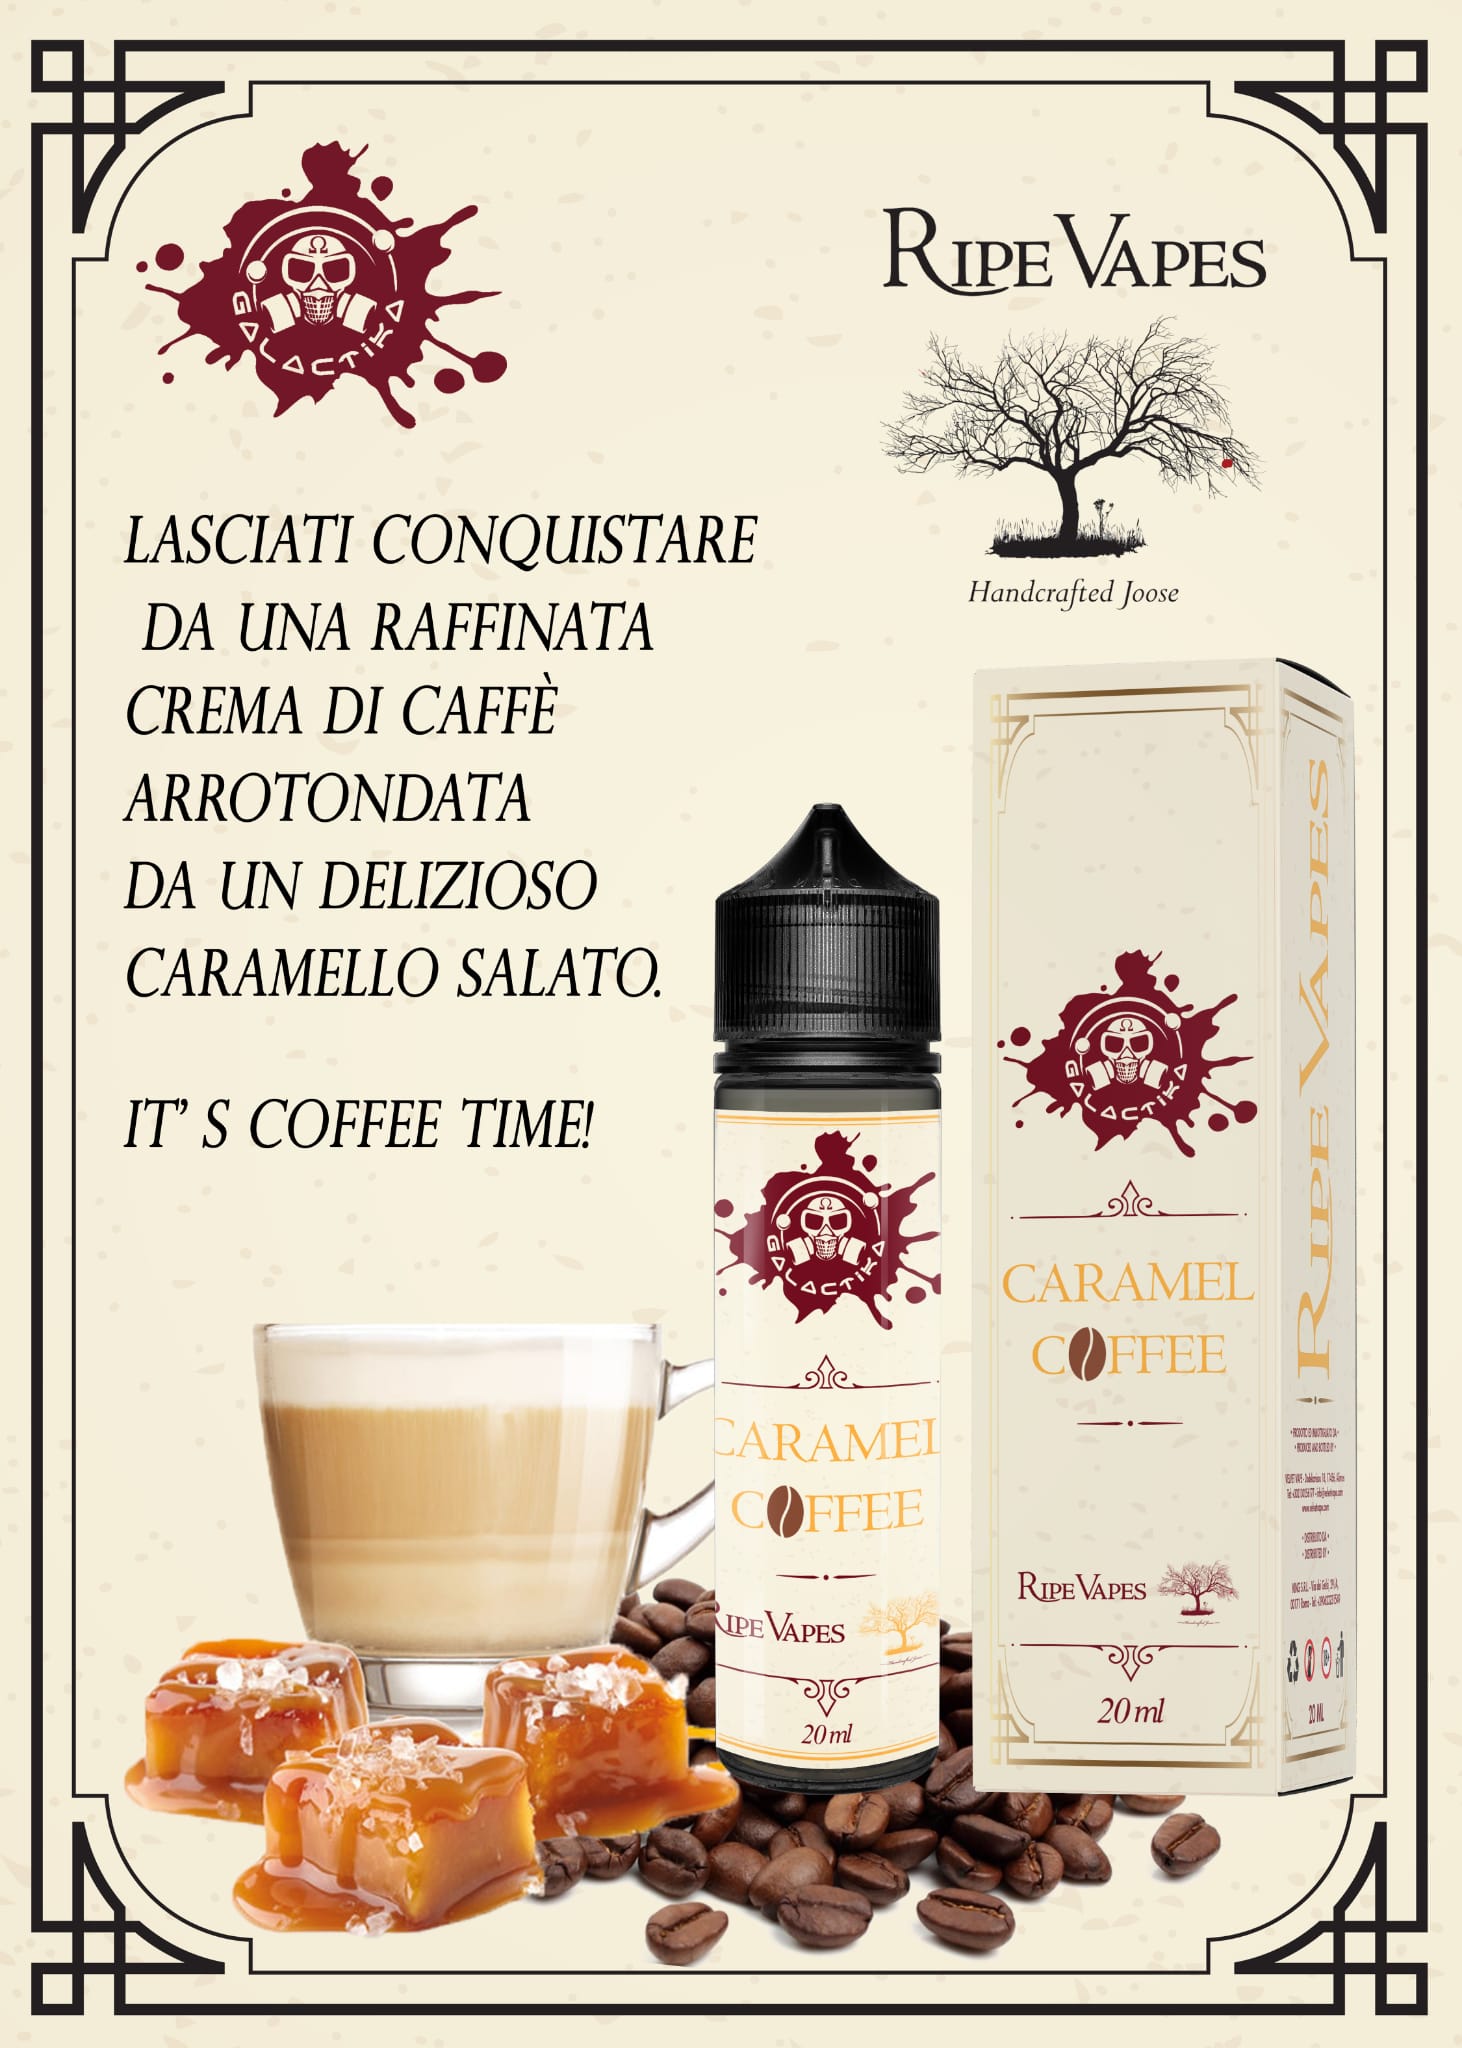 Caramel Coffee (20ml) - Galactika / Ripe Vapes